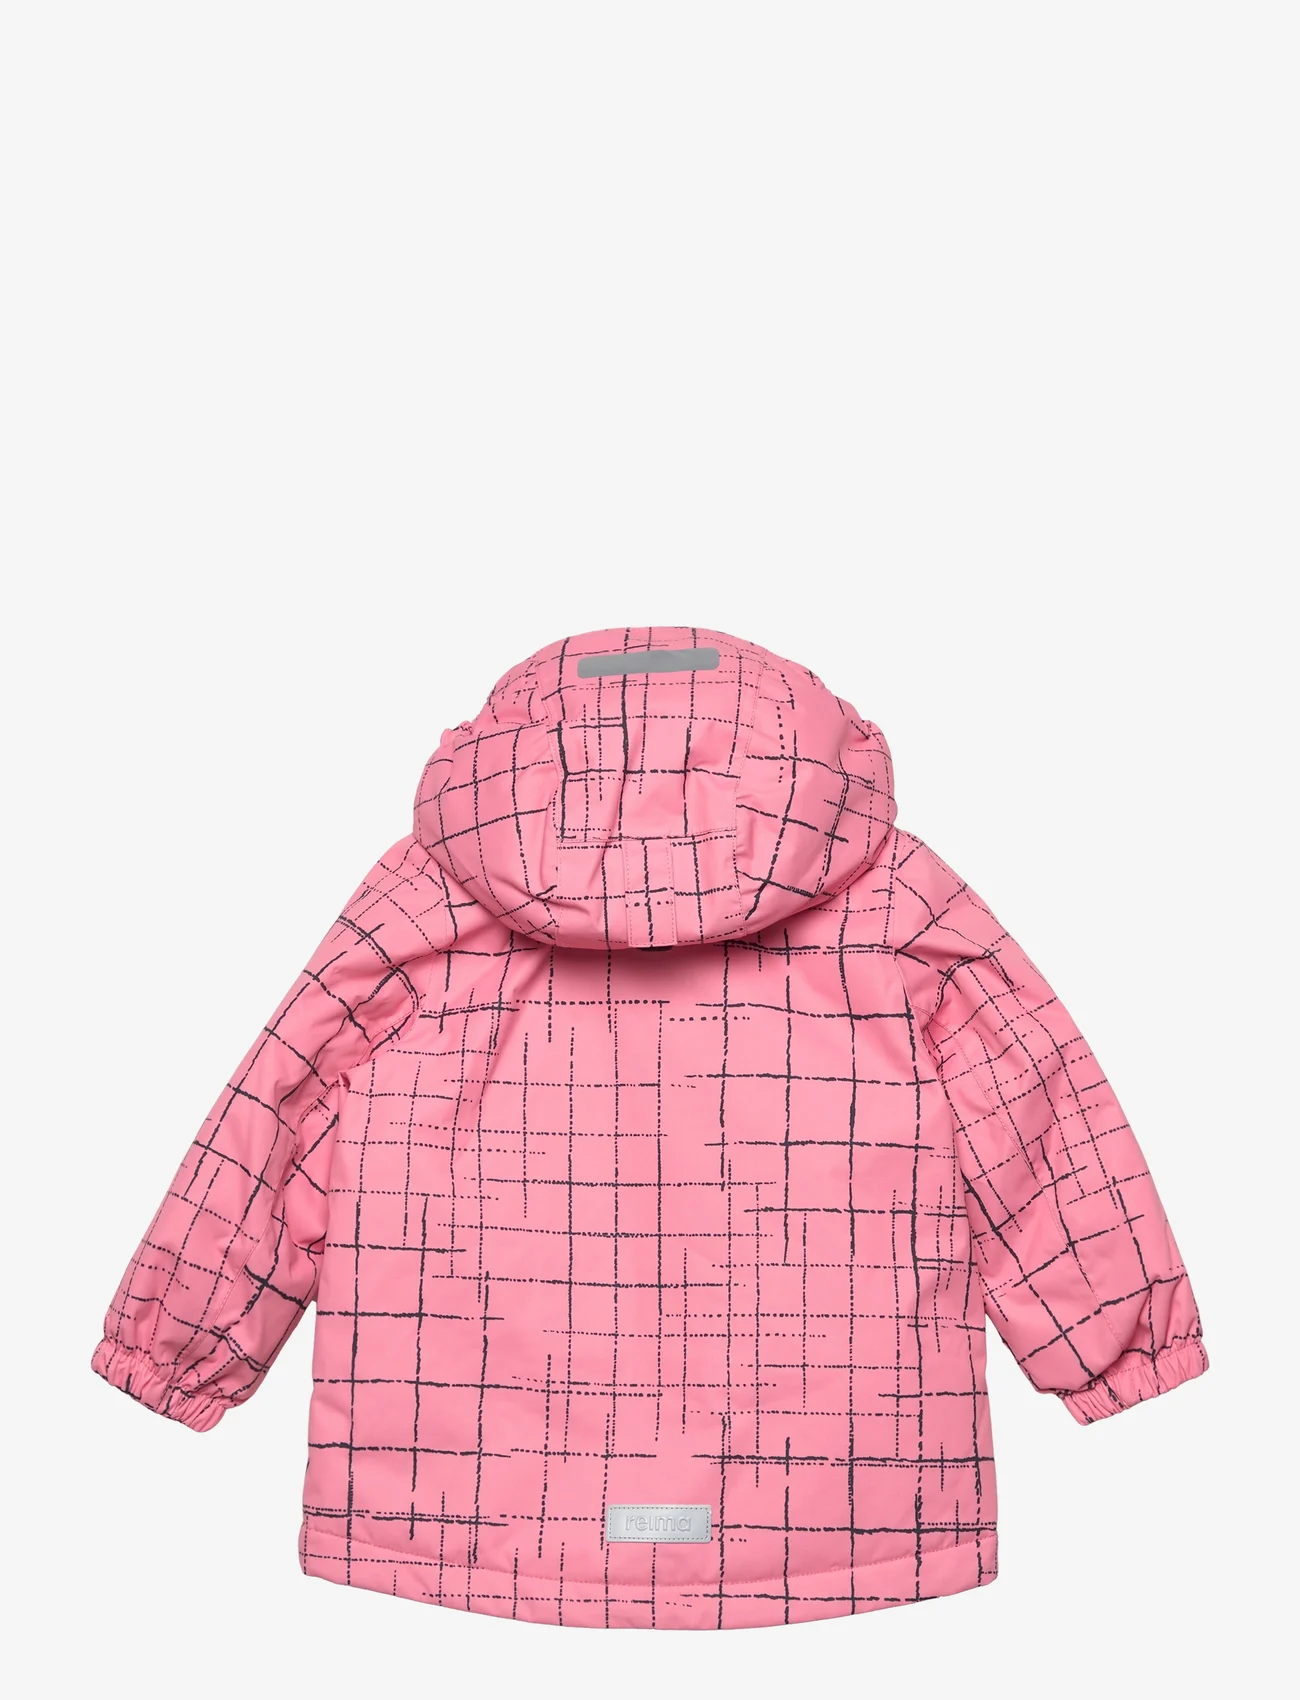 Reima - Winter jacket Sanelma - skaljackor - bubblegum pink - 1